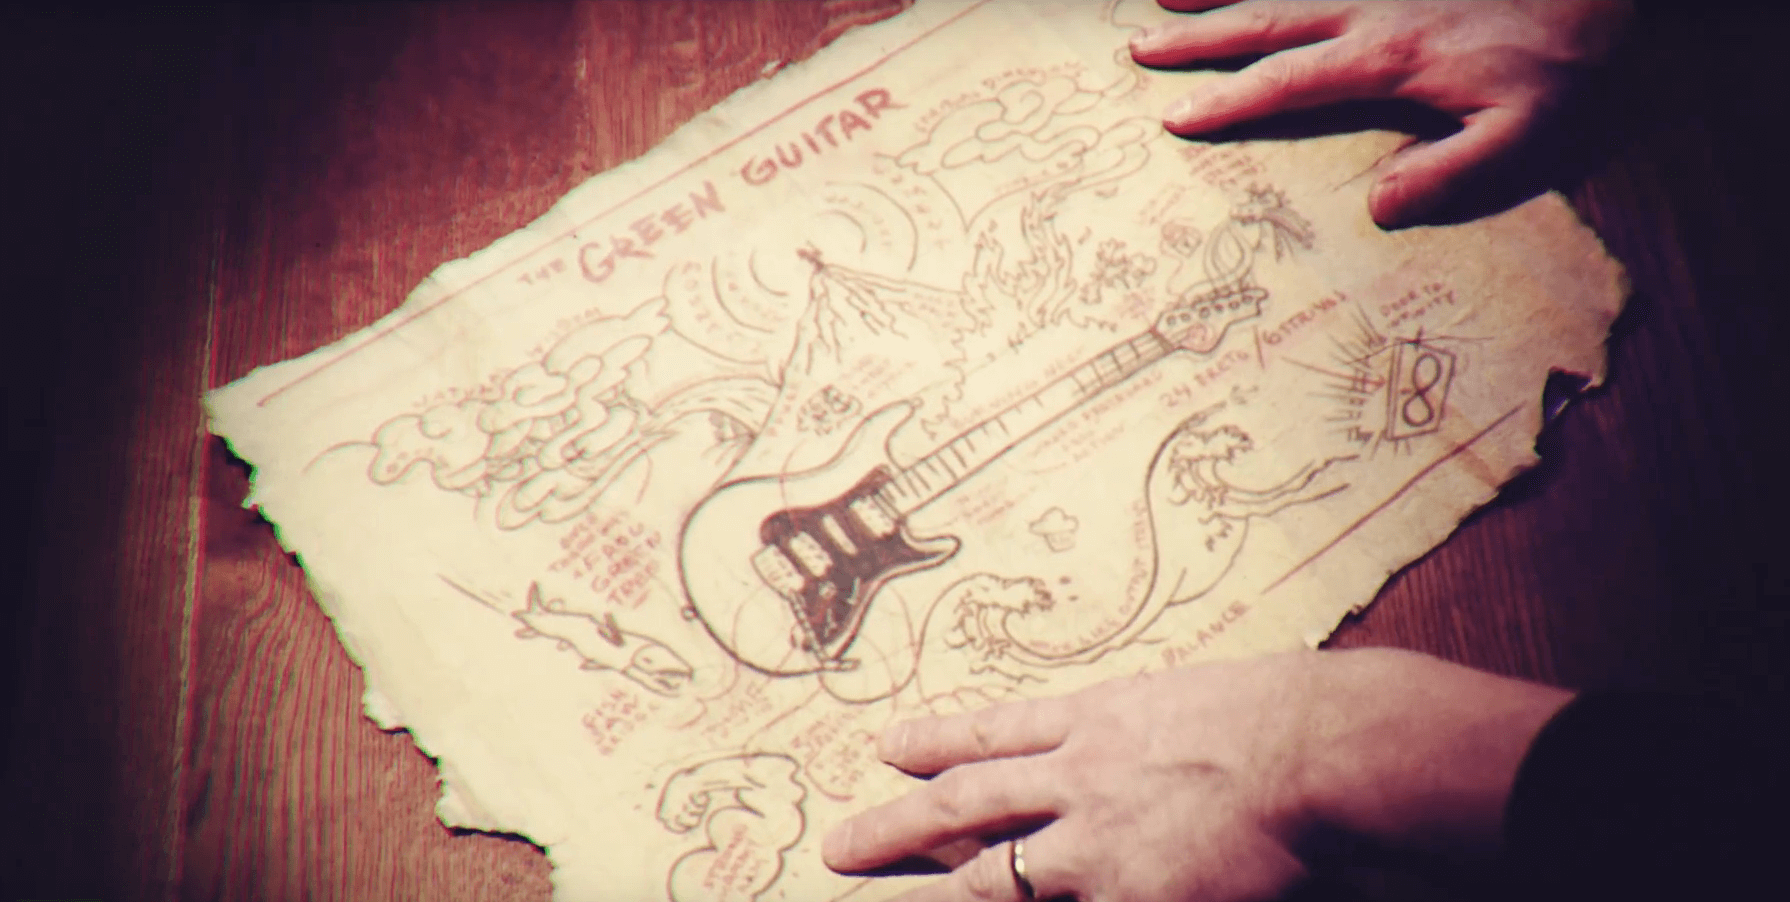 The Green Guitar for Mr. Fastfinger